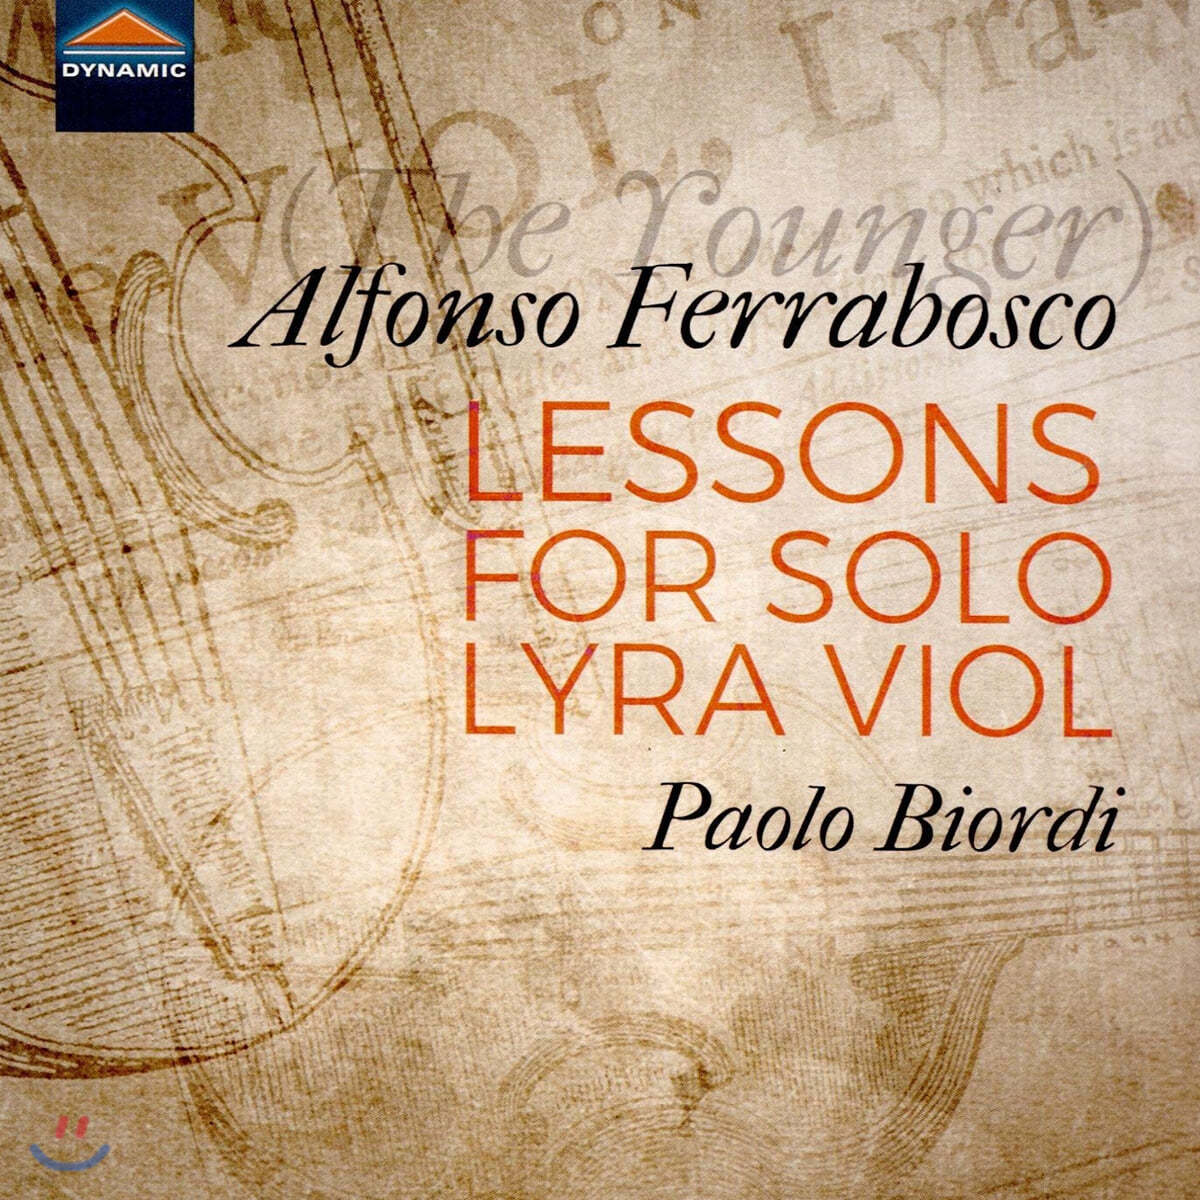 Paolo Biordi 알폰소 페라보스코 2세: 독주 리라 비올을 위한 교습서 (Alfonso Ferrabosco II: Lessons for solo lyra viol)